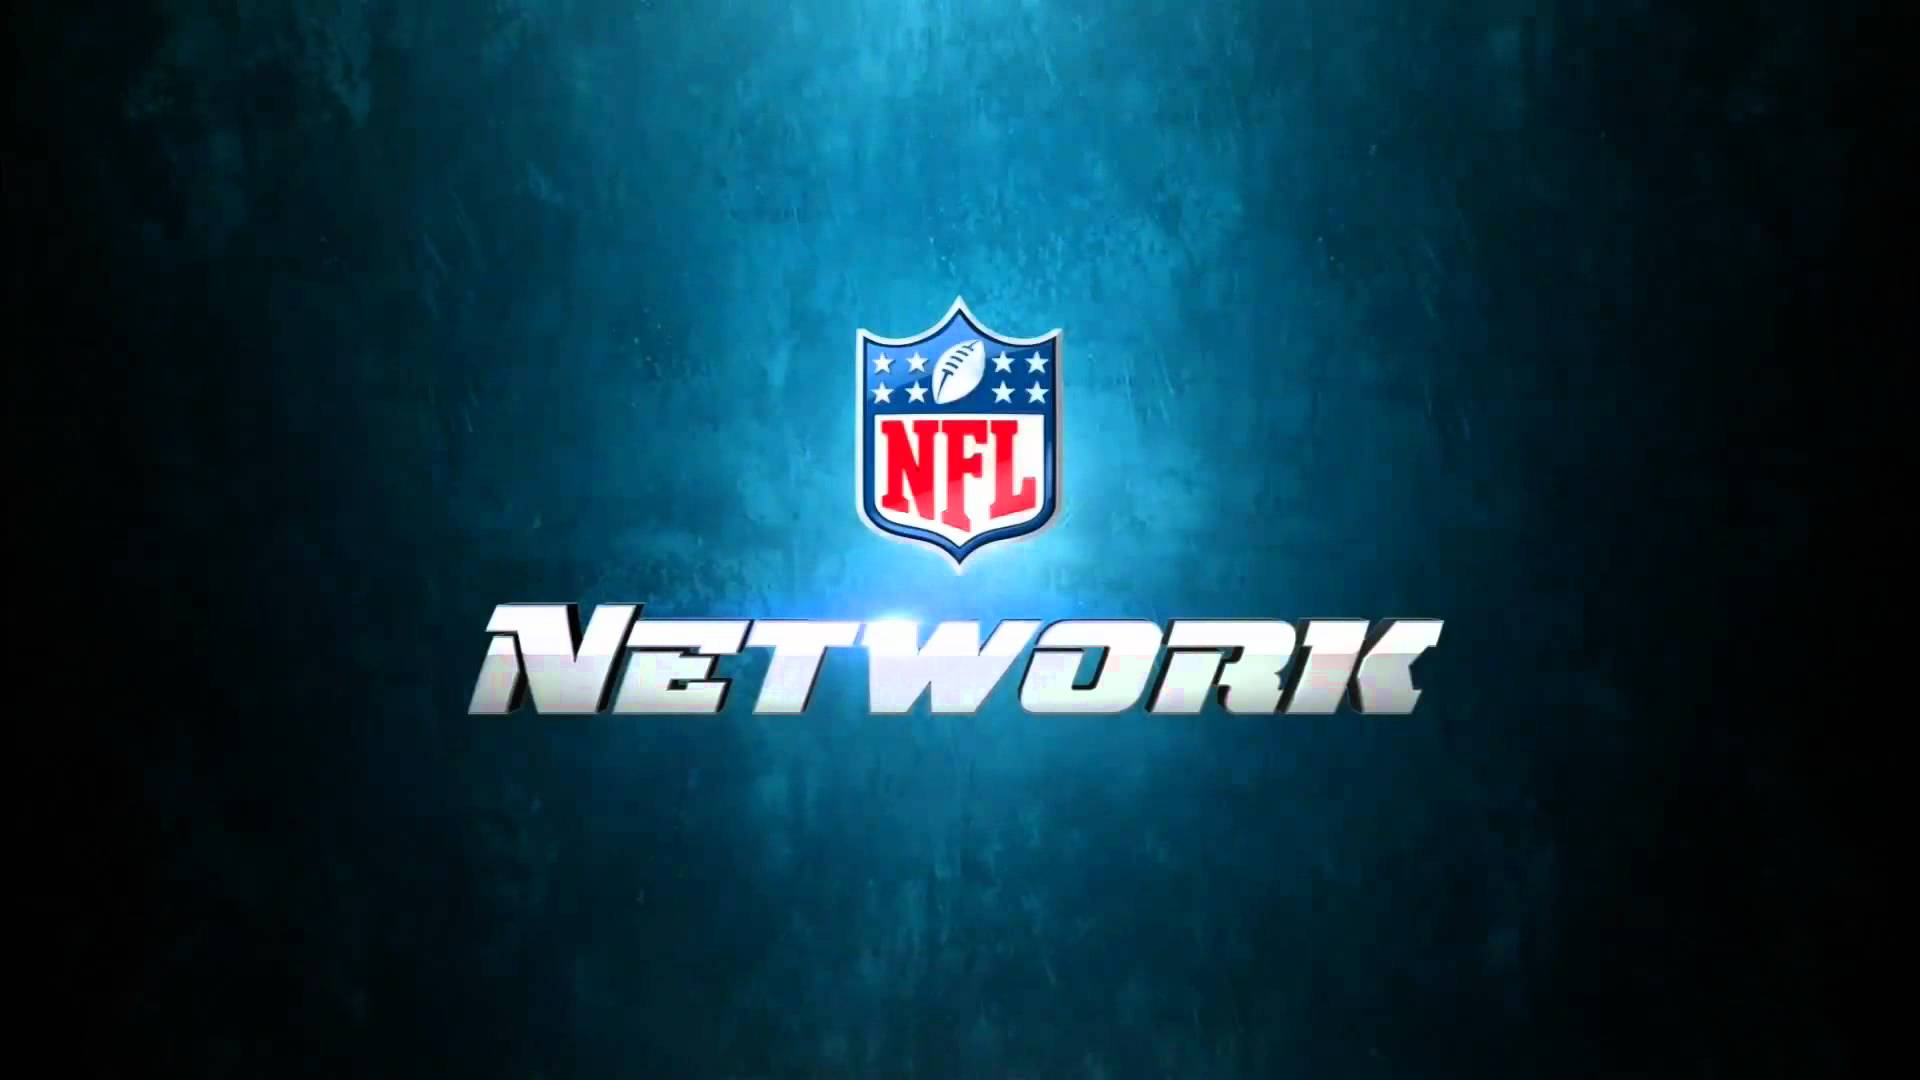 NFL Network Sports Marketing & PR Roundup